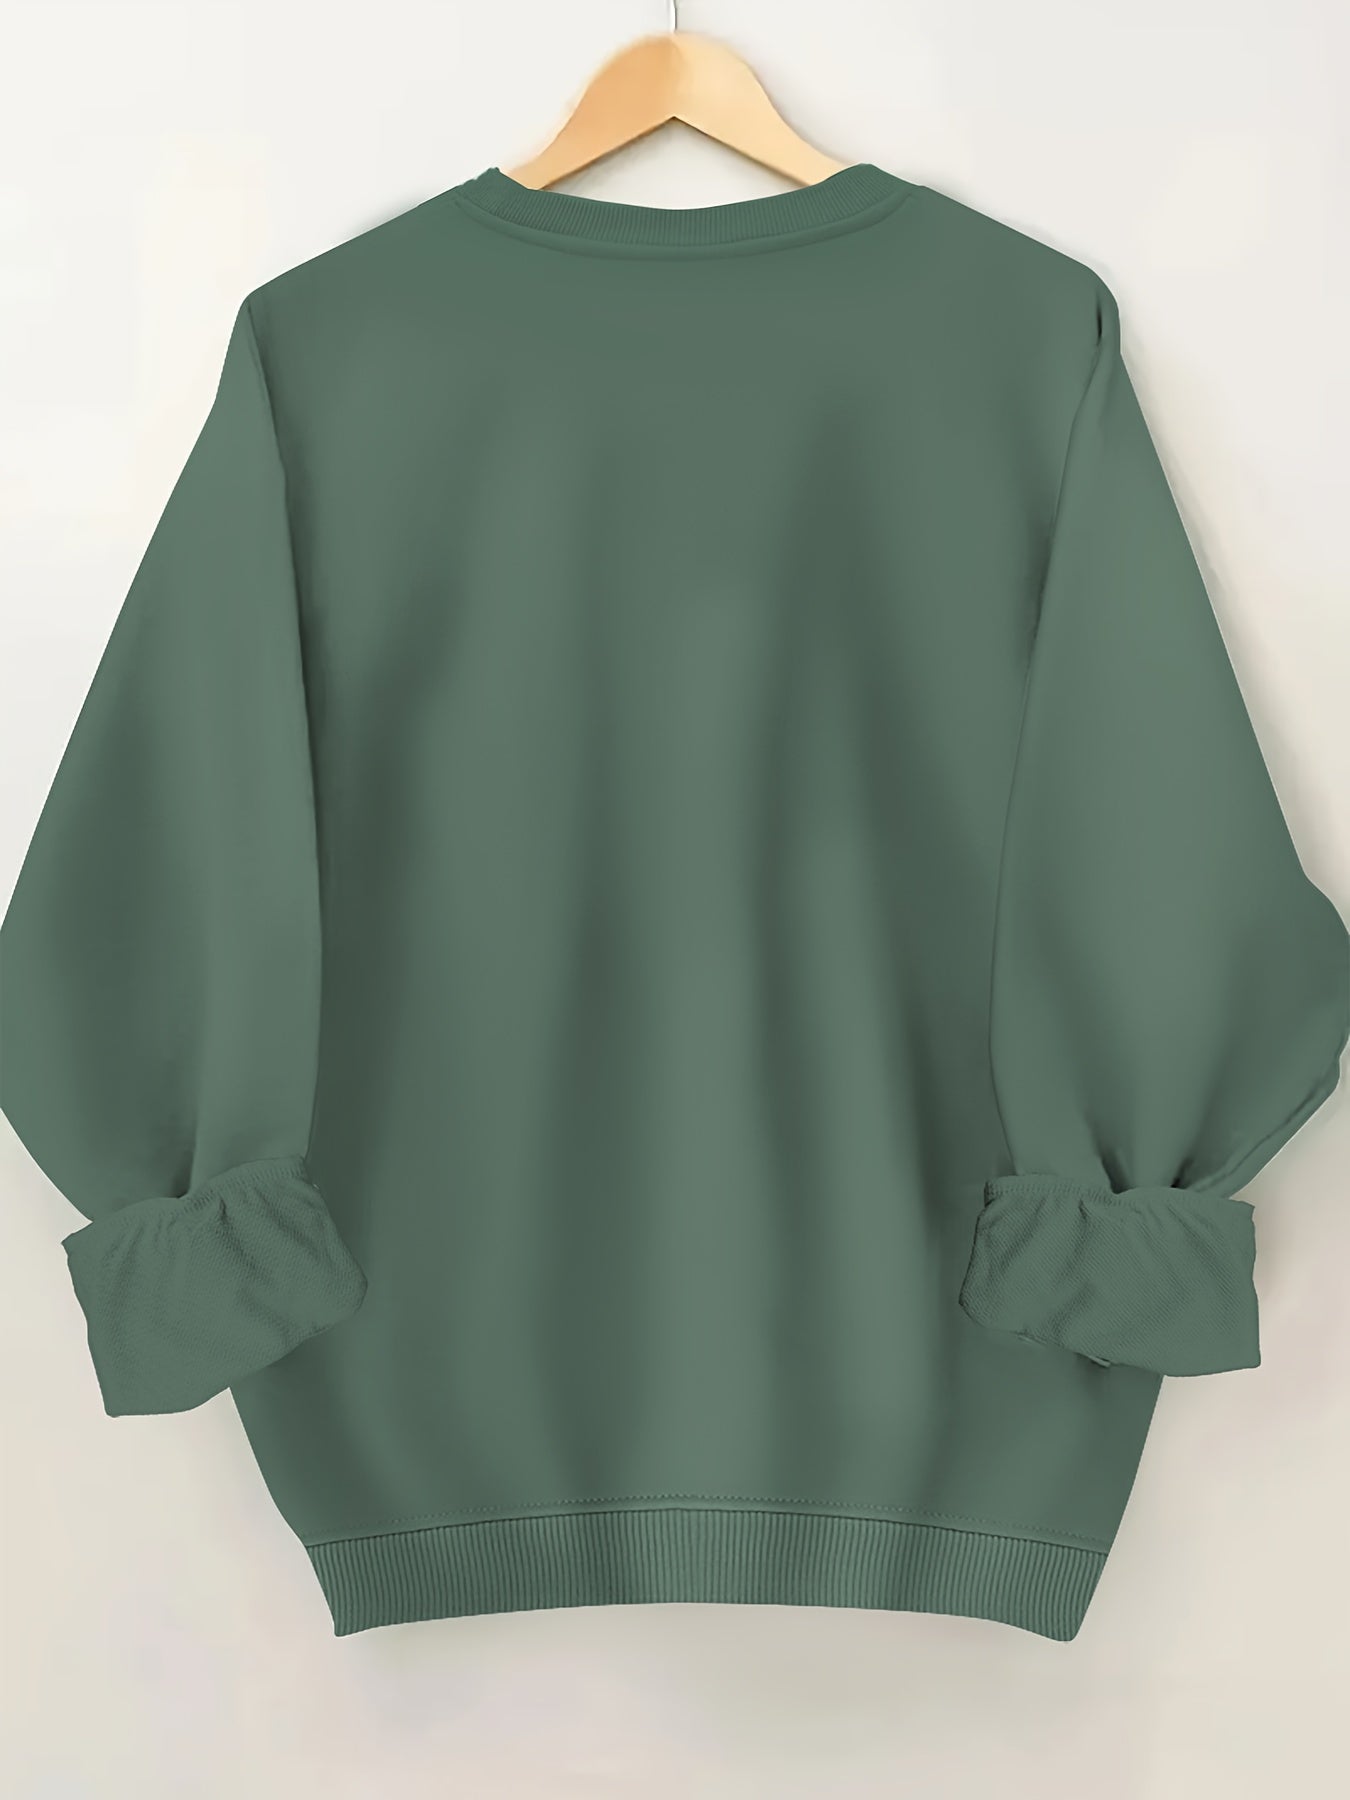 Made To Worship Plus Size Women's Christian Pullover Sweatshirt claimedbygoddesigns